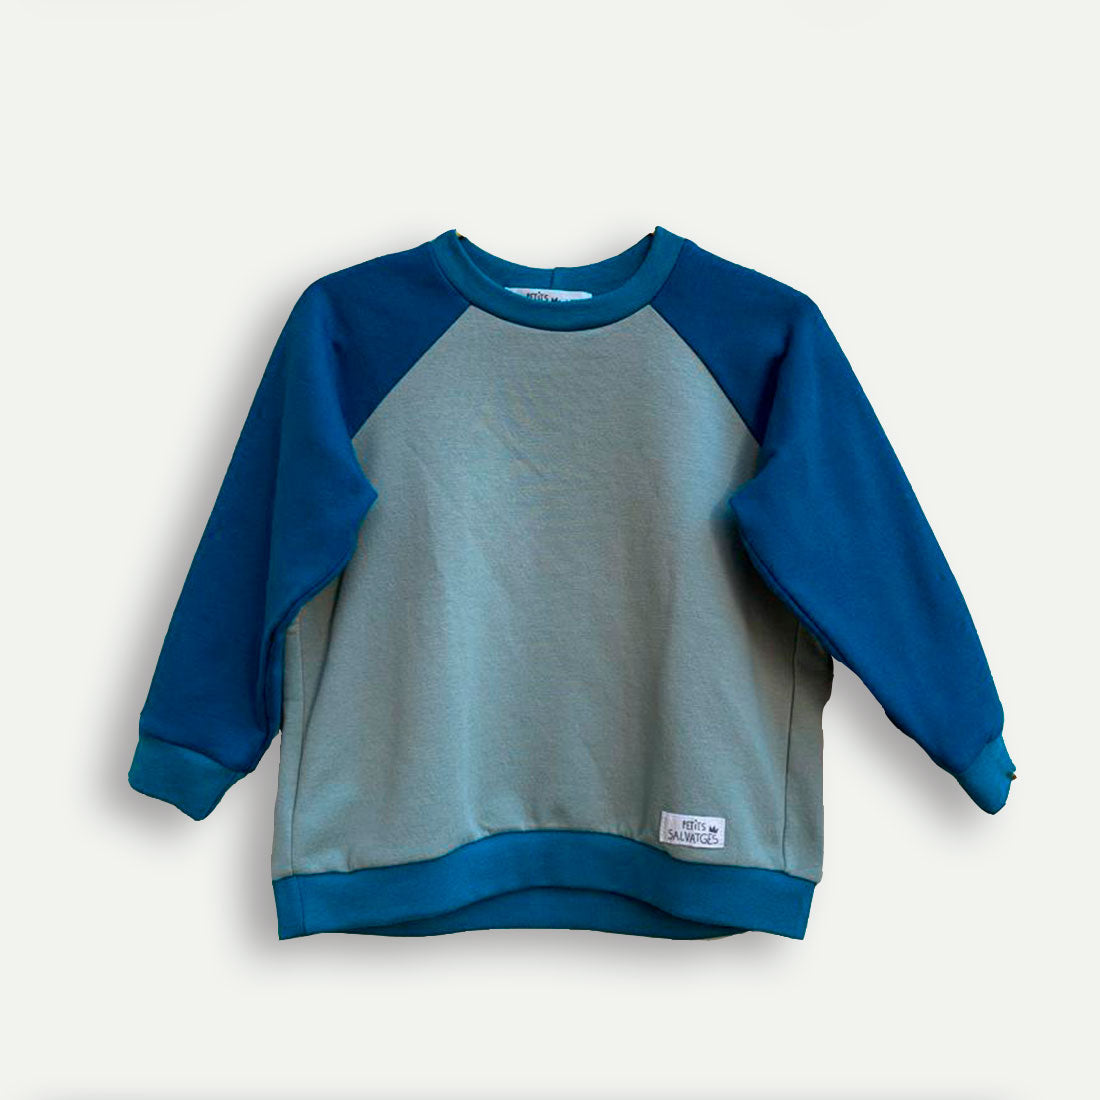 Two-tone children's sweatshirt